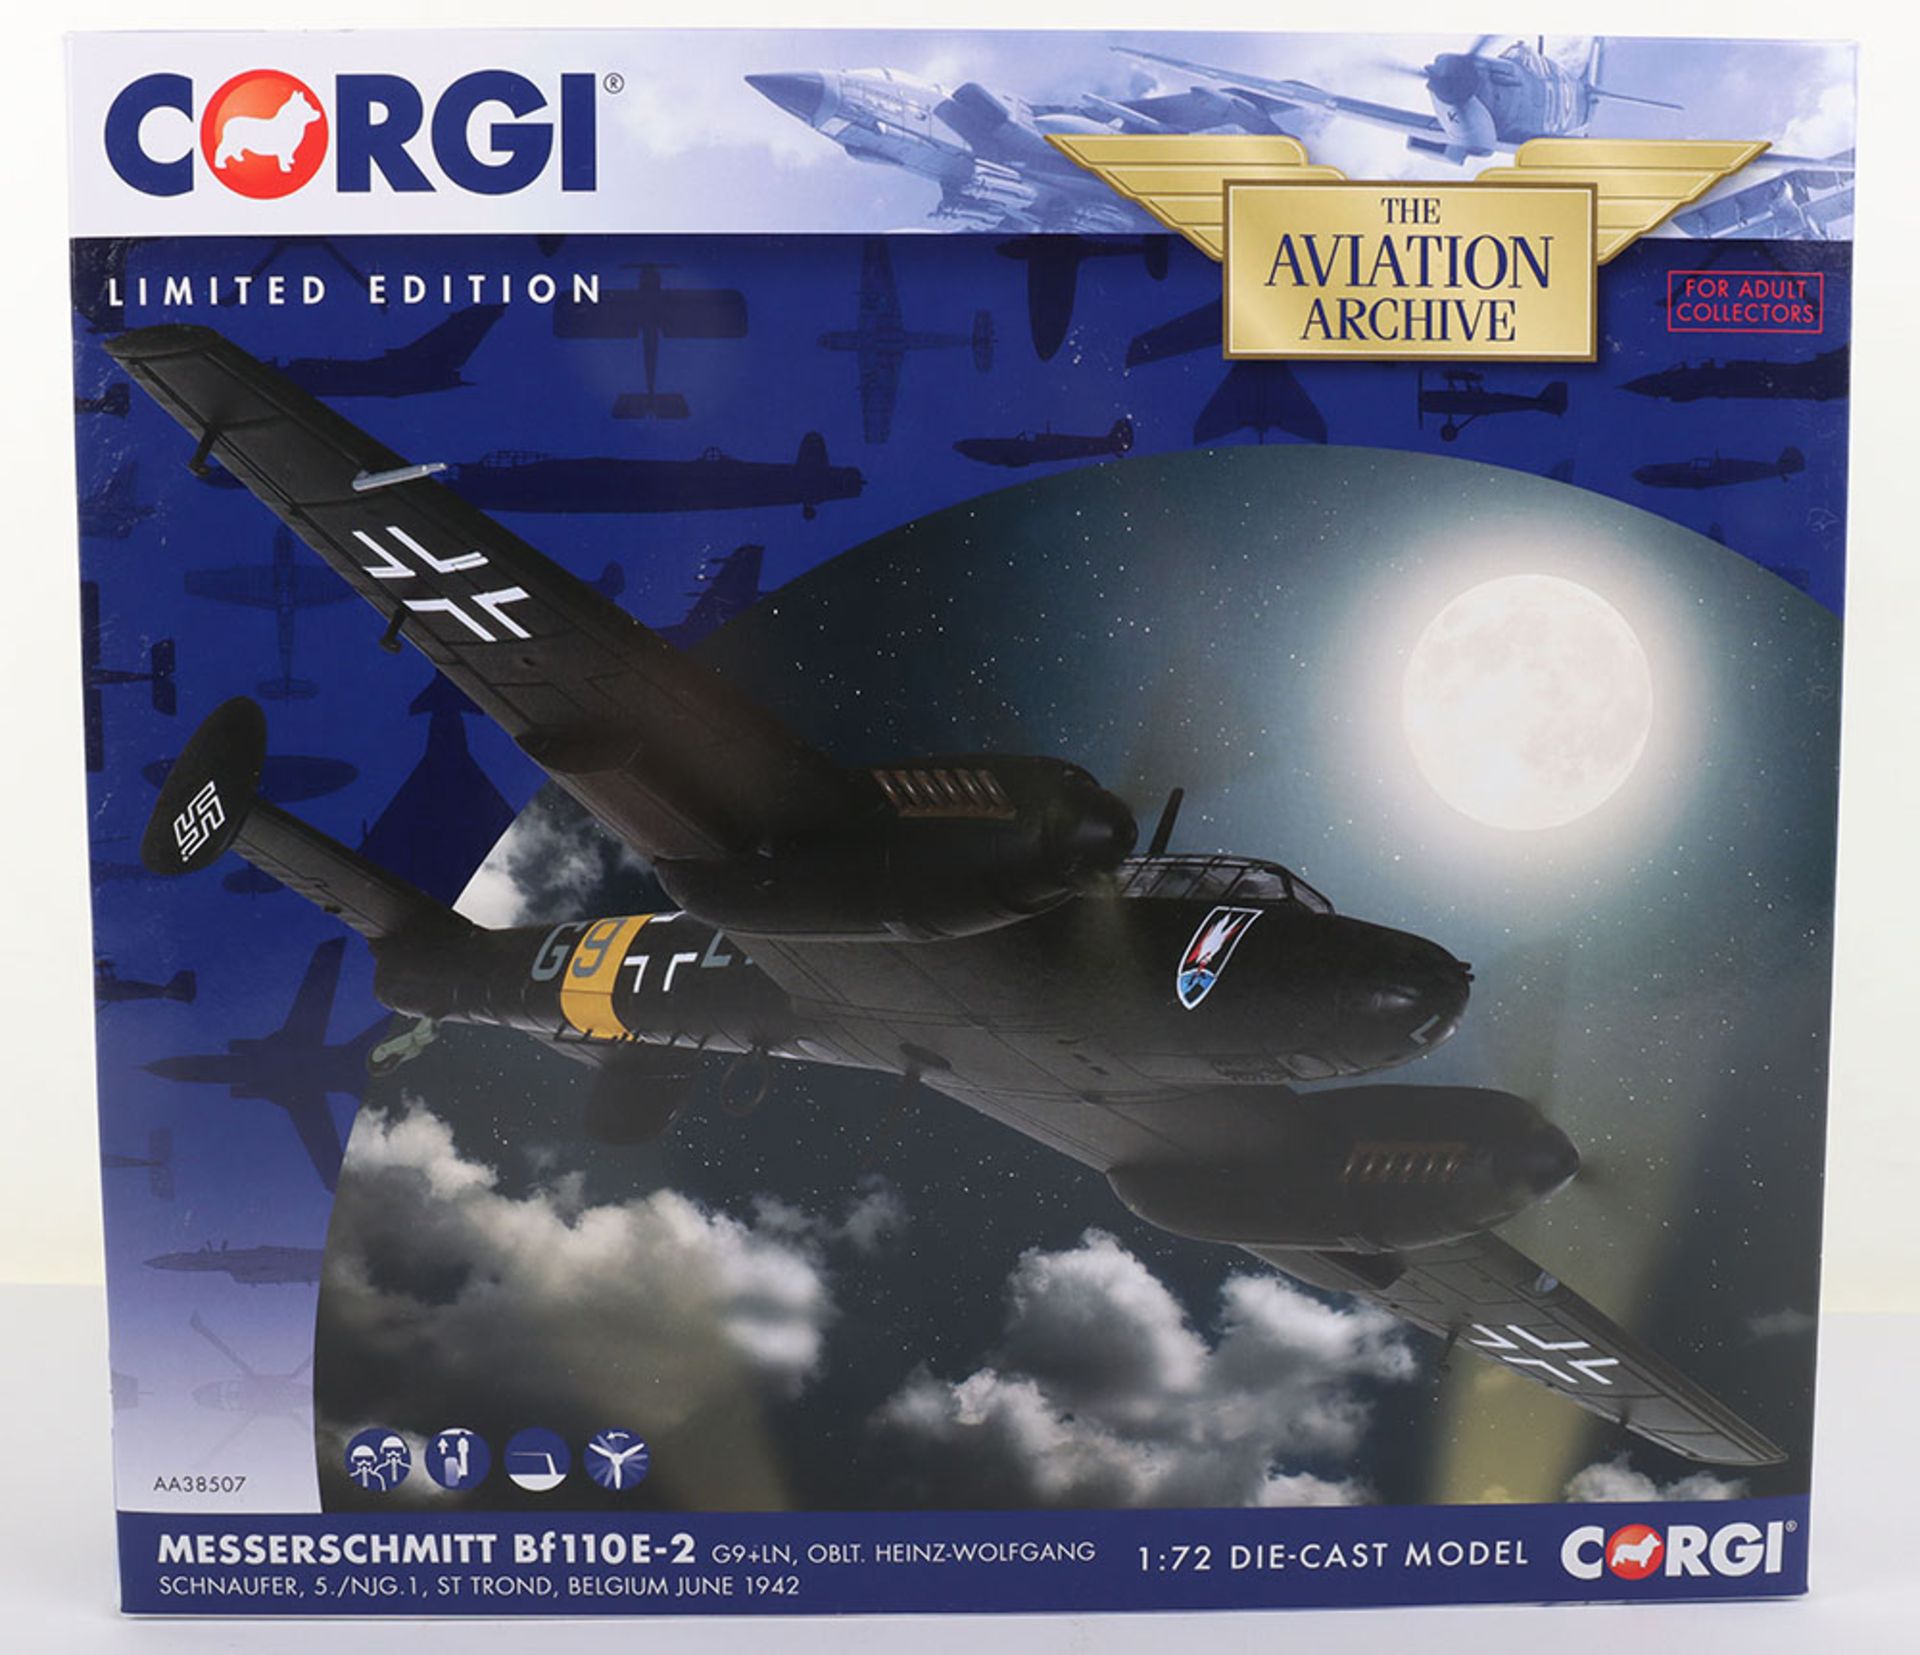 Corgi “The Aviation Archive” AA38507 Messerschmitt Bf110e-2 boxed model